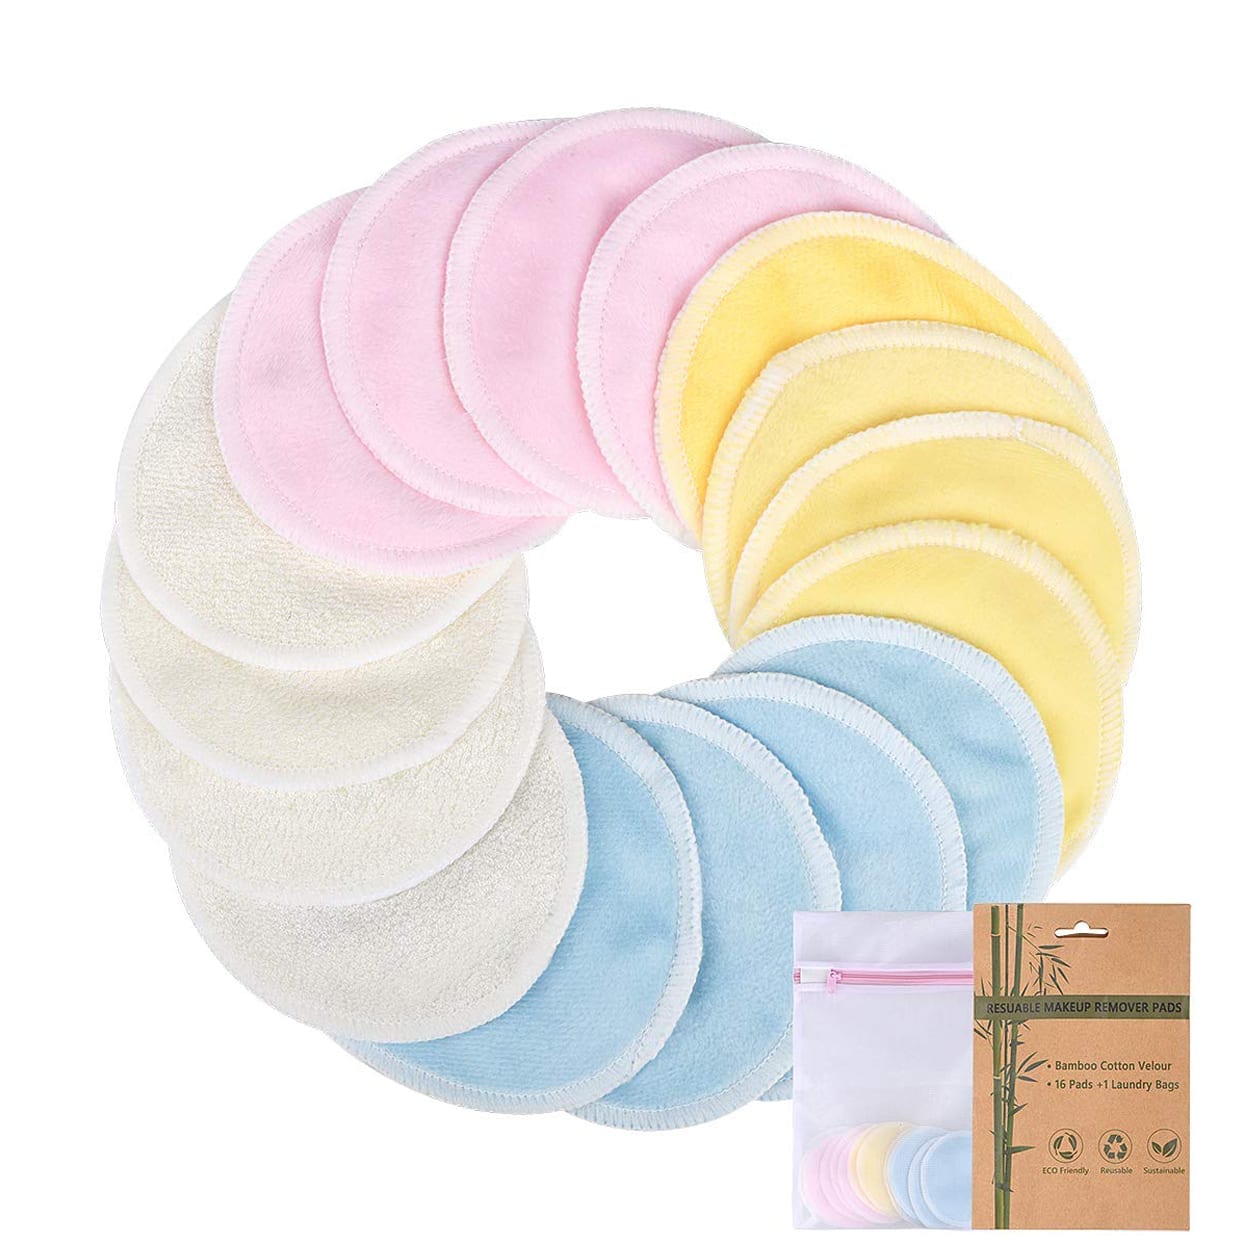 A circle of several circular multi-color towels.